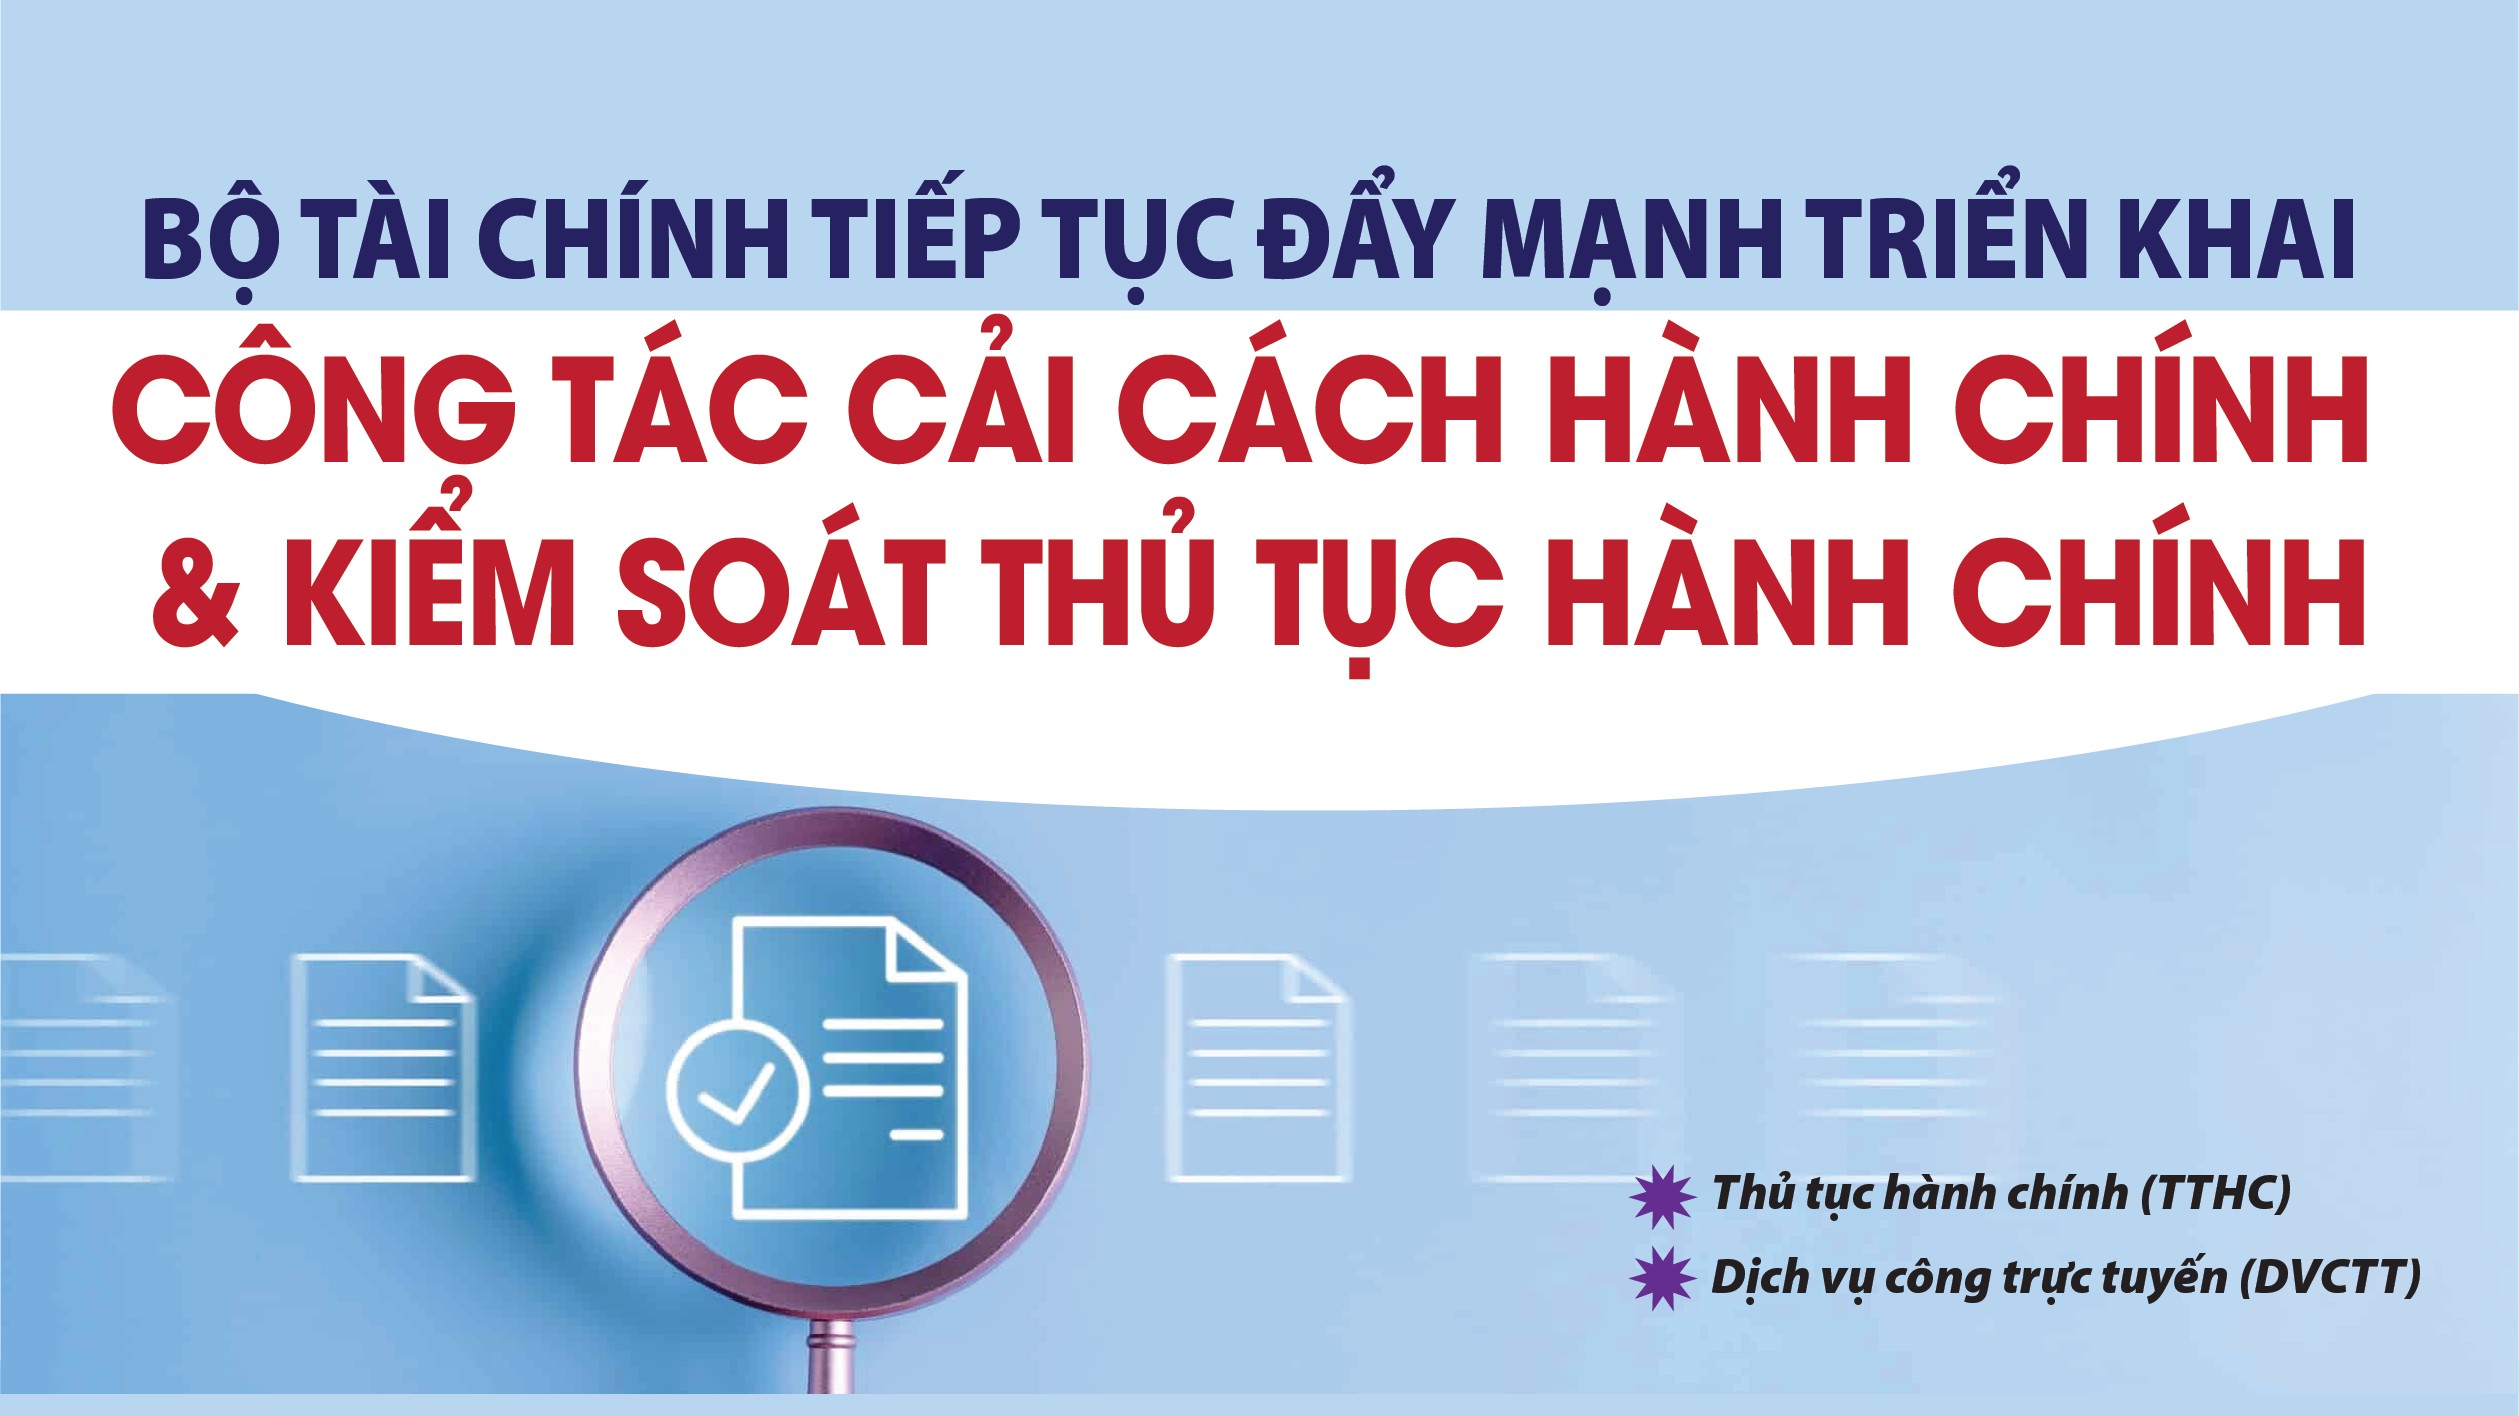 infographics bo tai chinh hien co 765 thu tuc hanh chinh con hieu luc